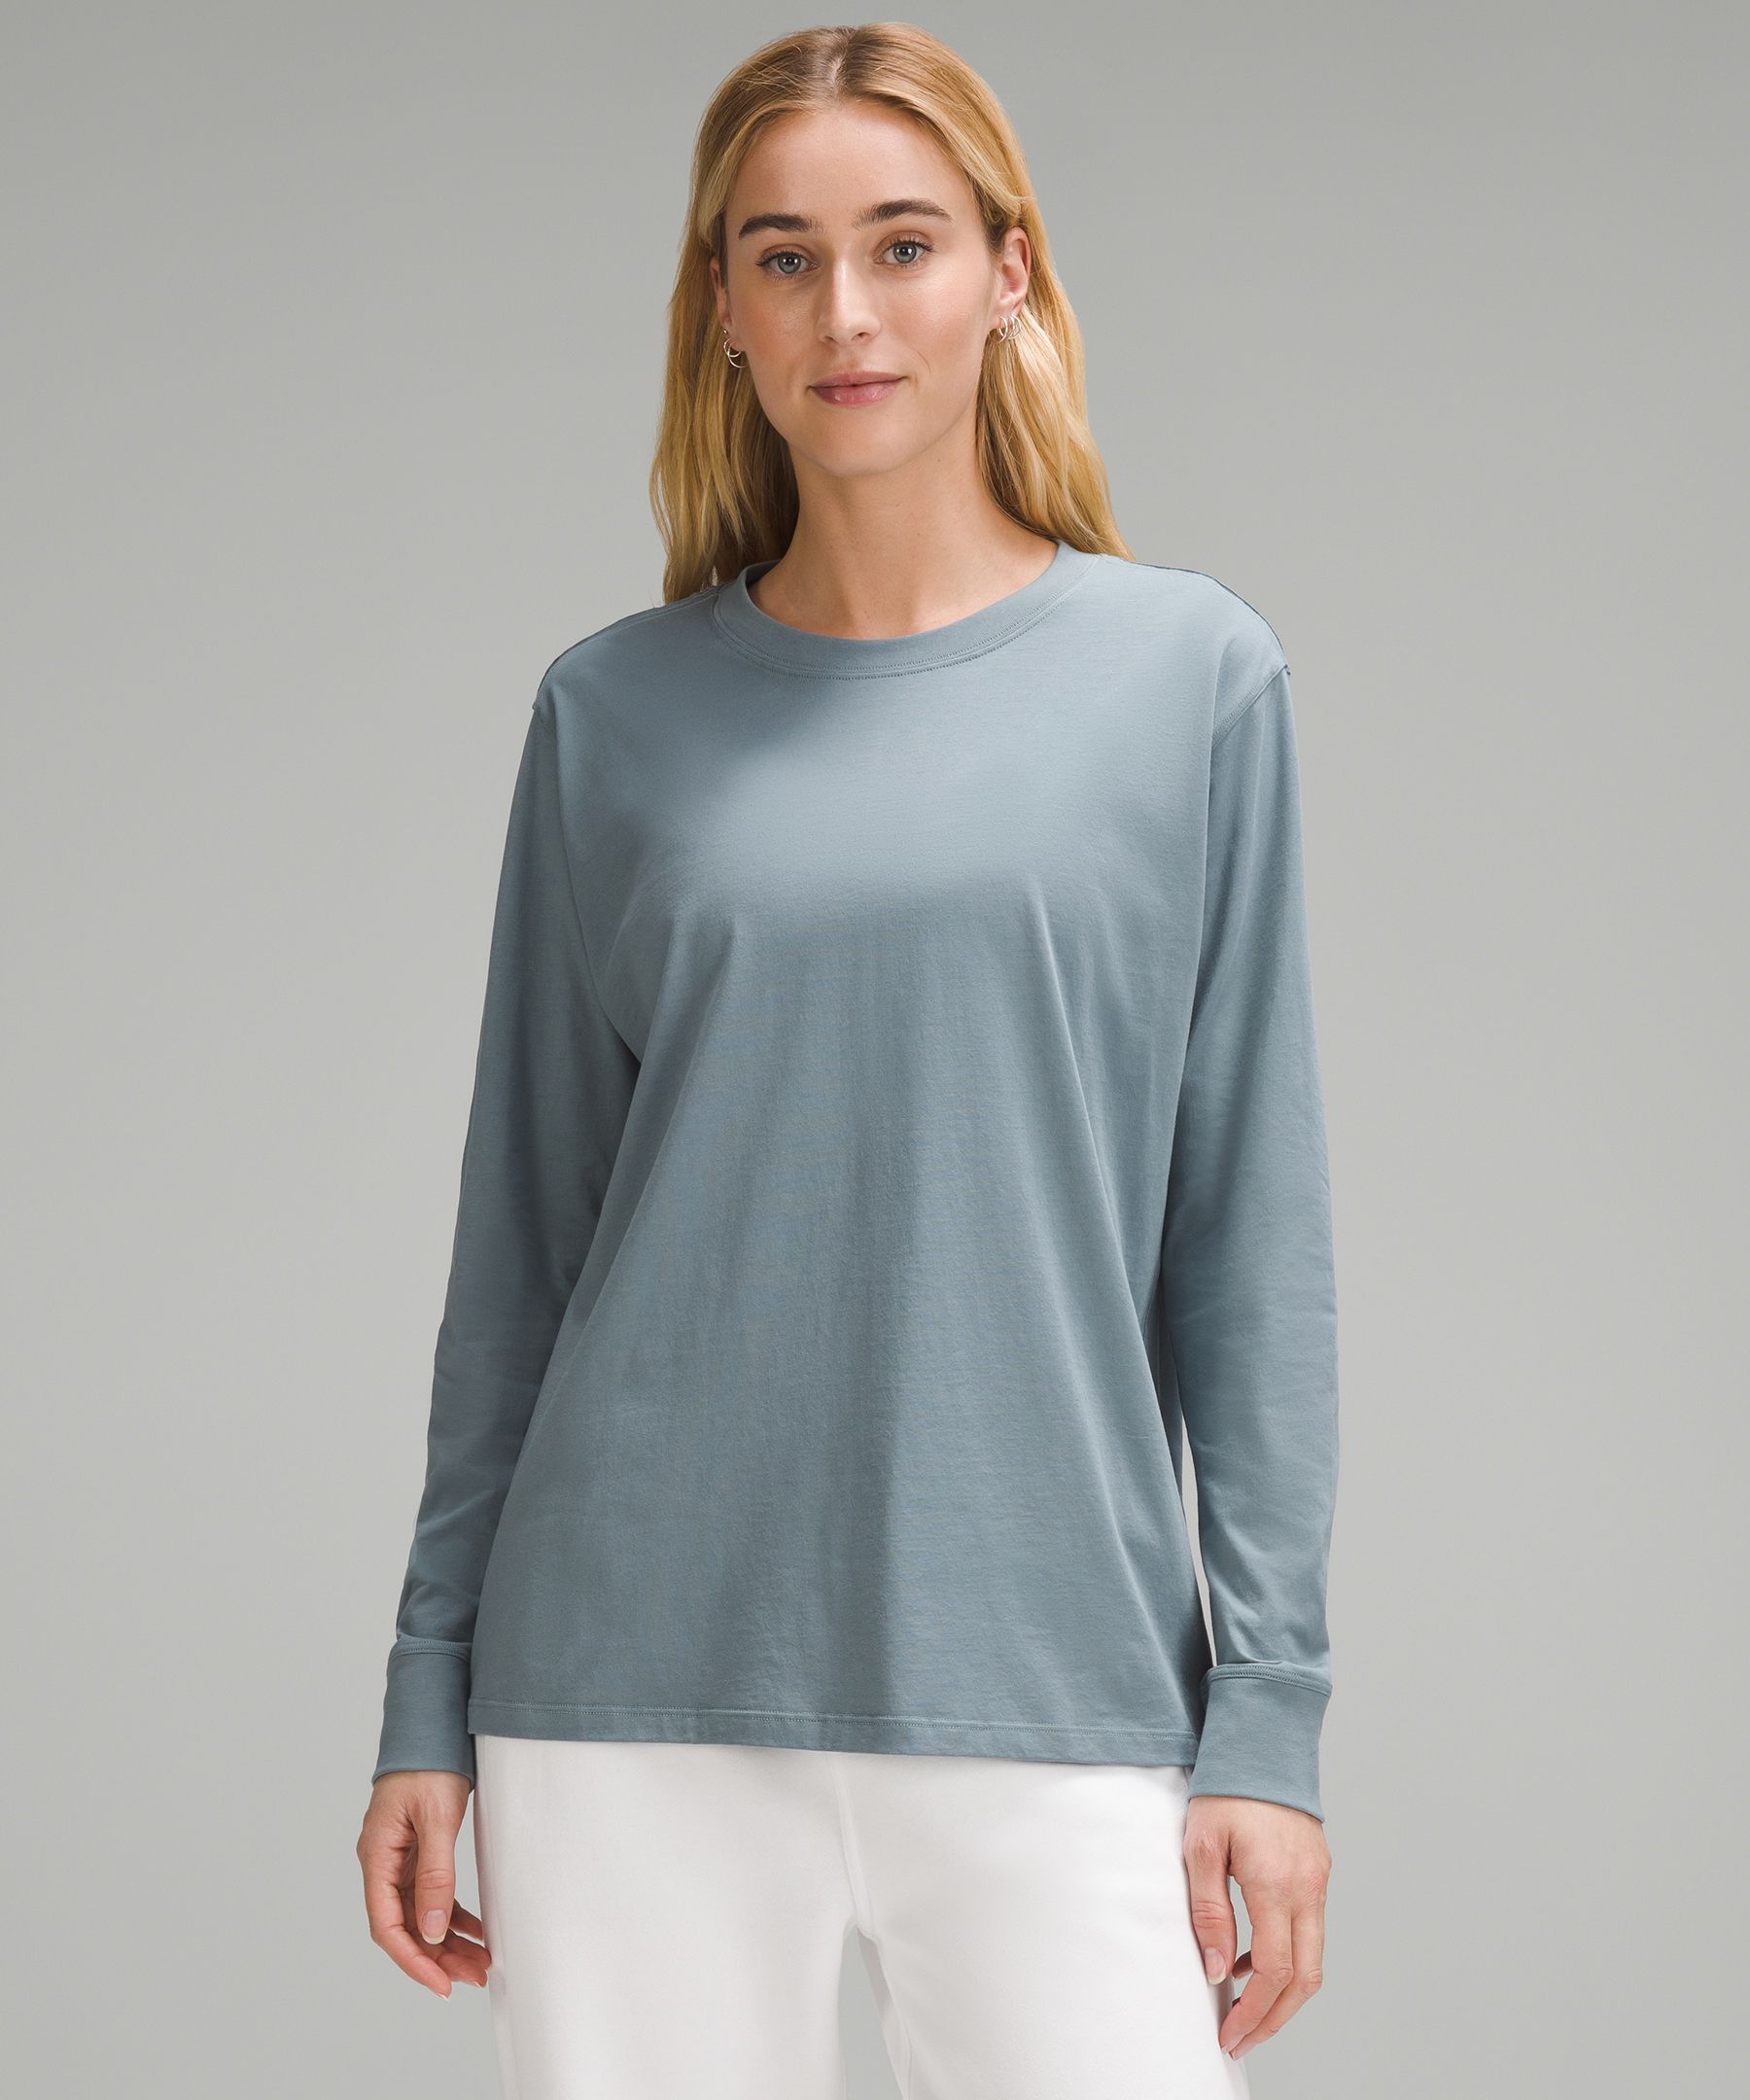 All Yours Long-Sleeve Shirt  Women's Long Sleeve Shirts